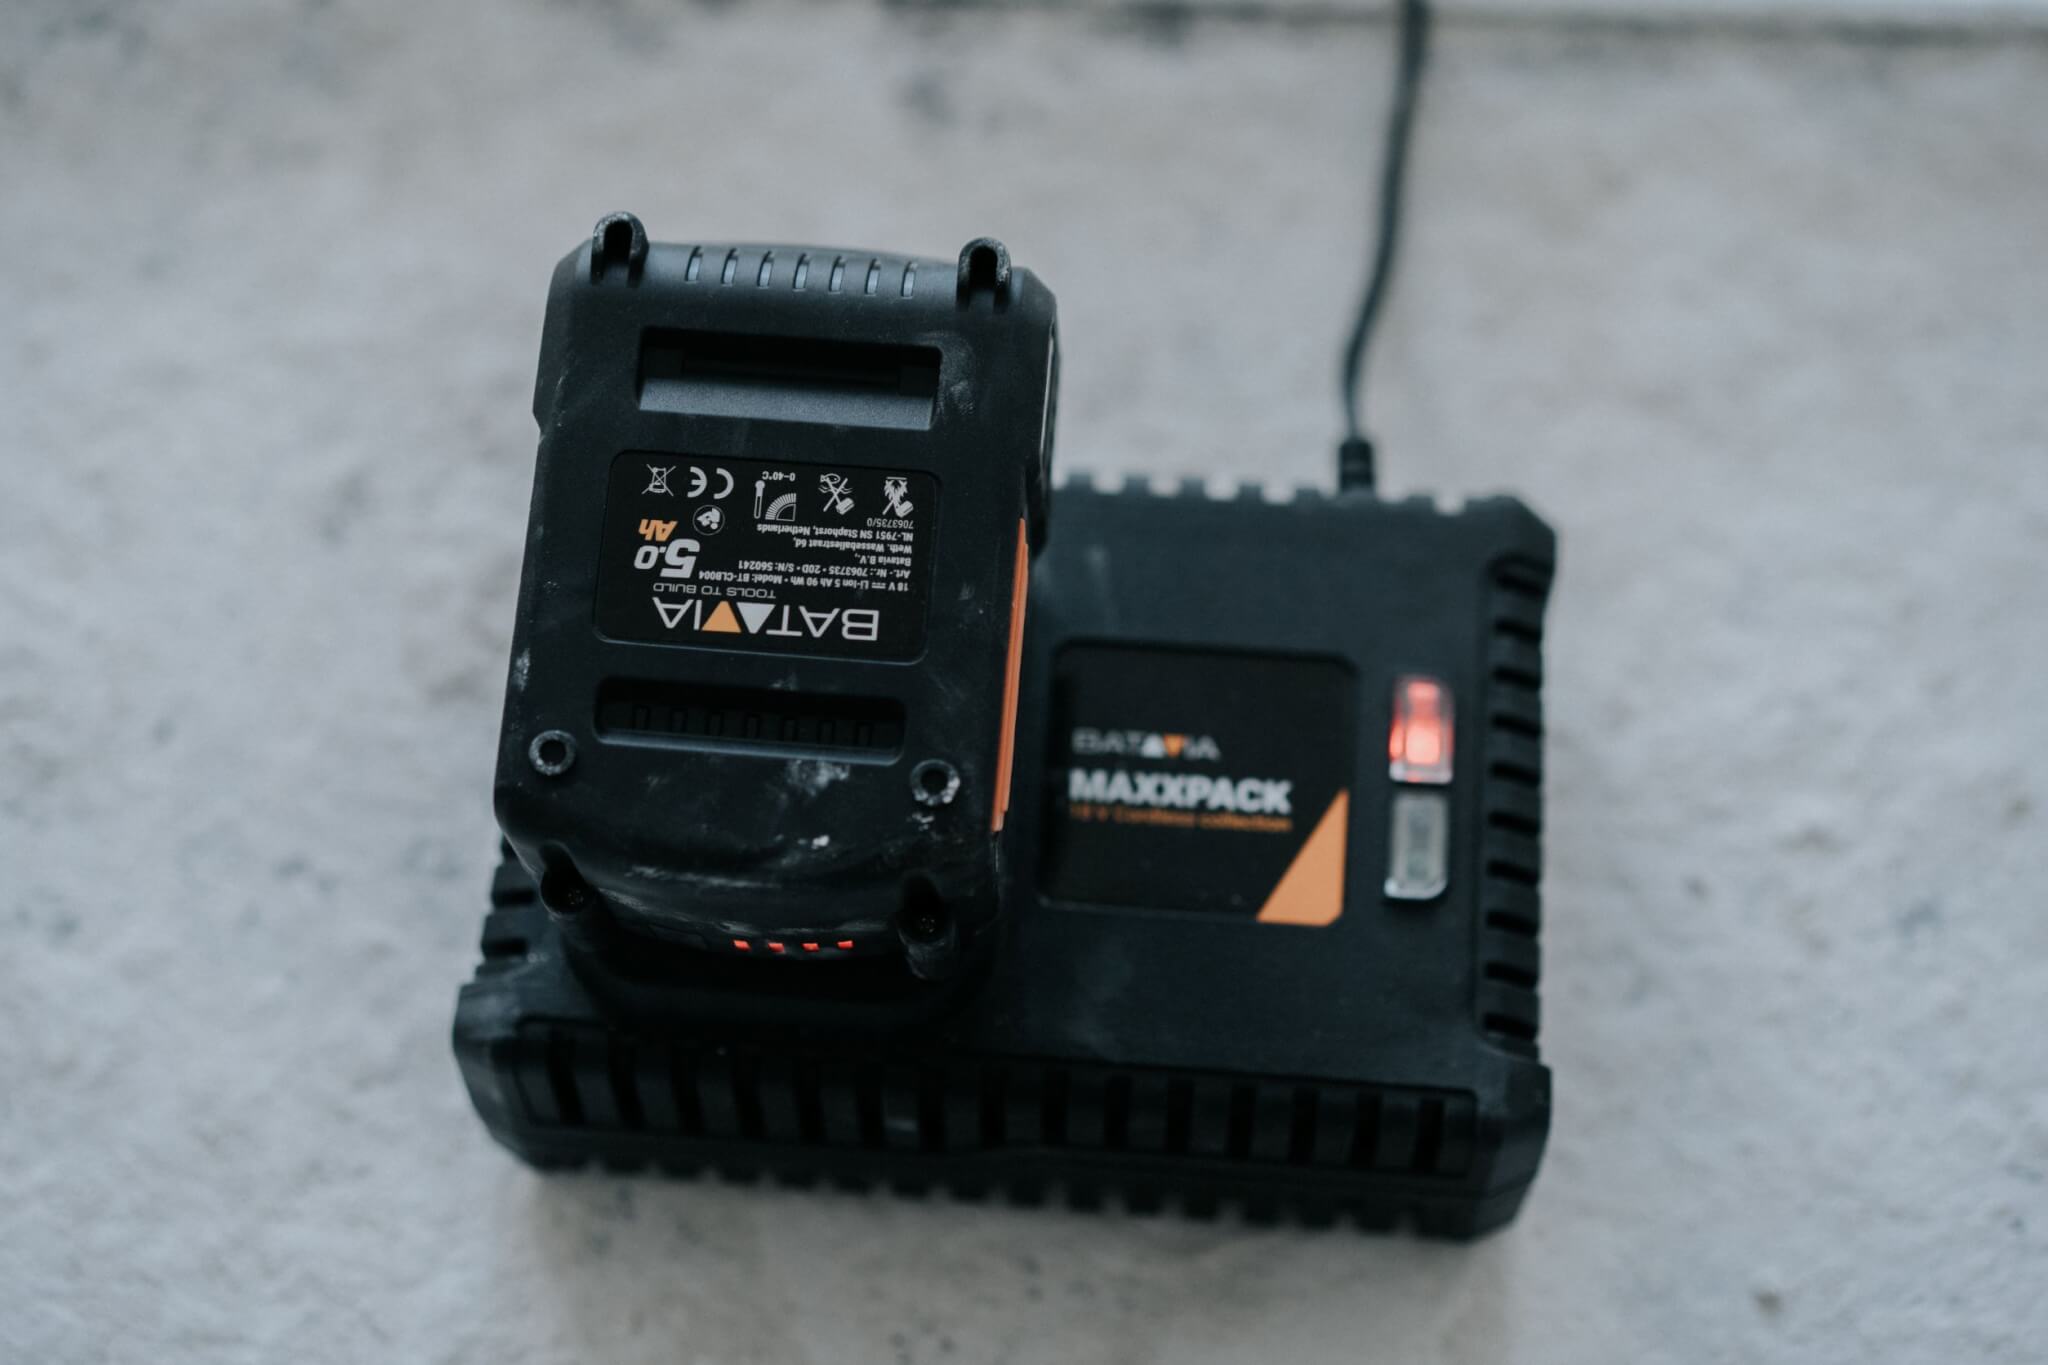 Fast Charger 18V Batteries powertools | Maxxpack collection | Batavia